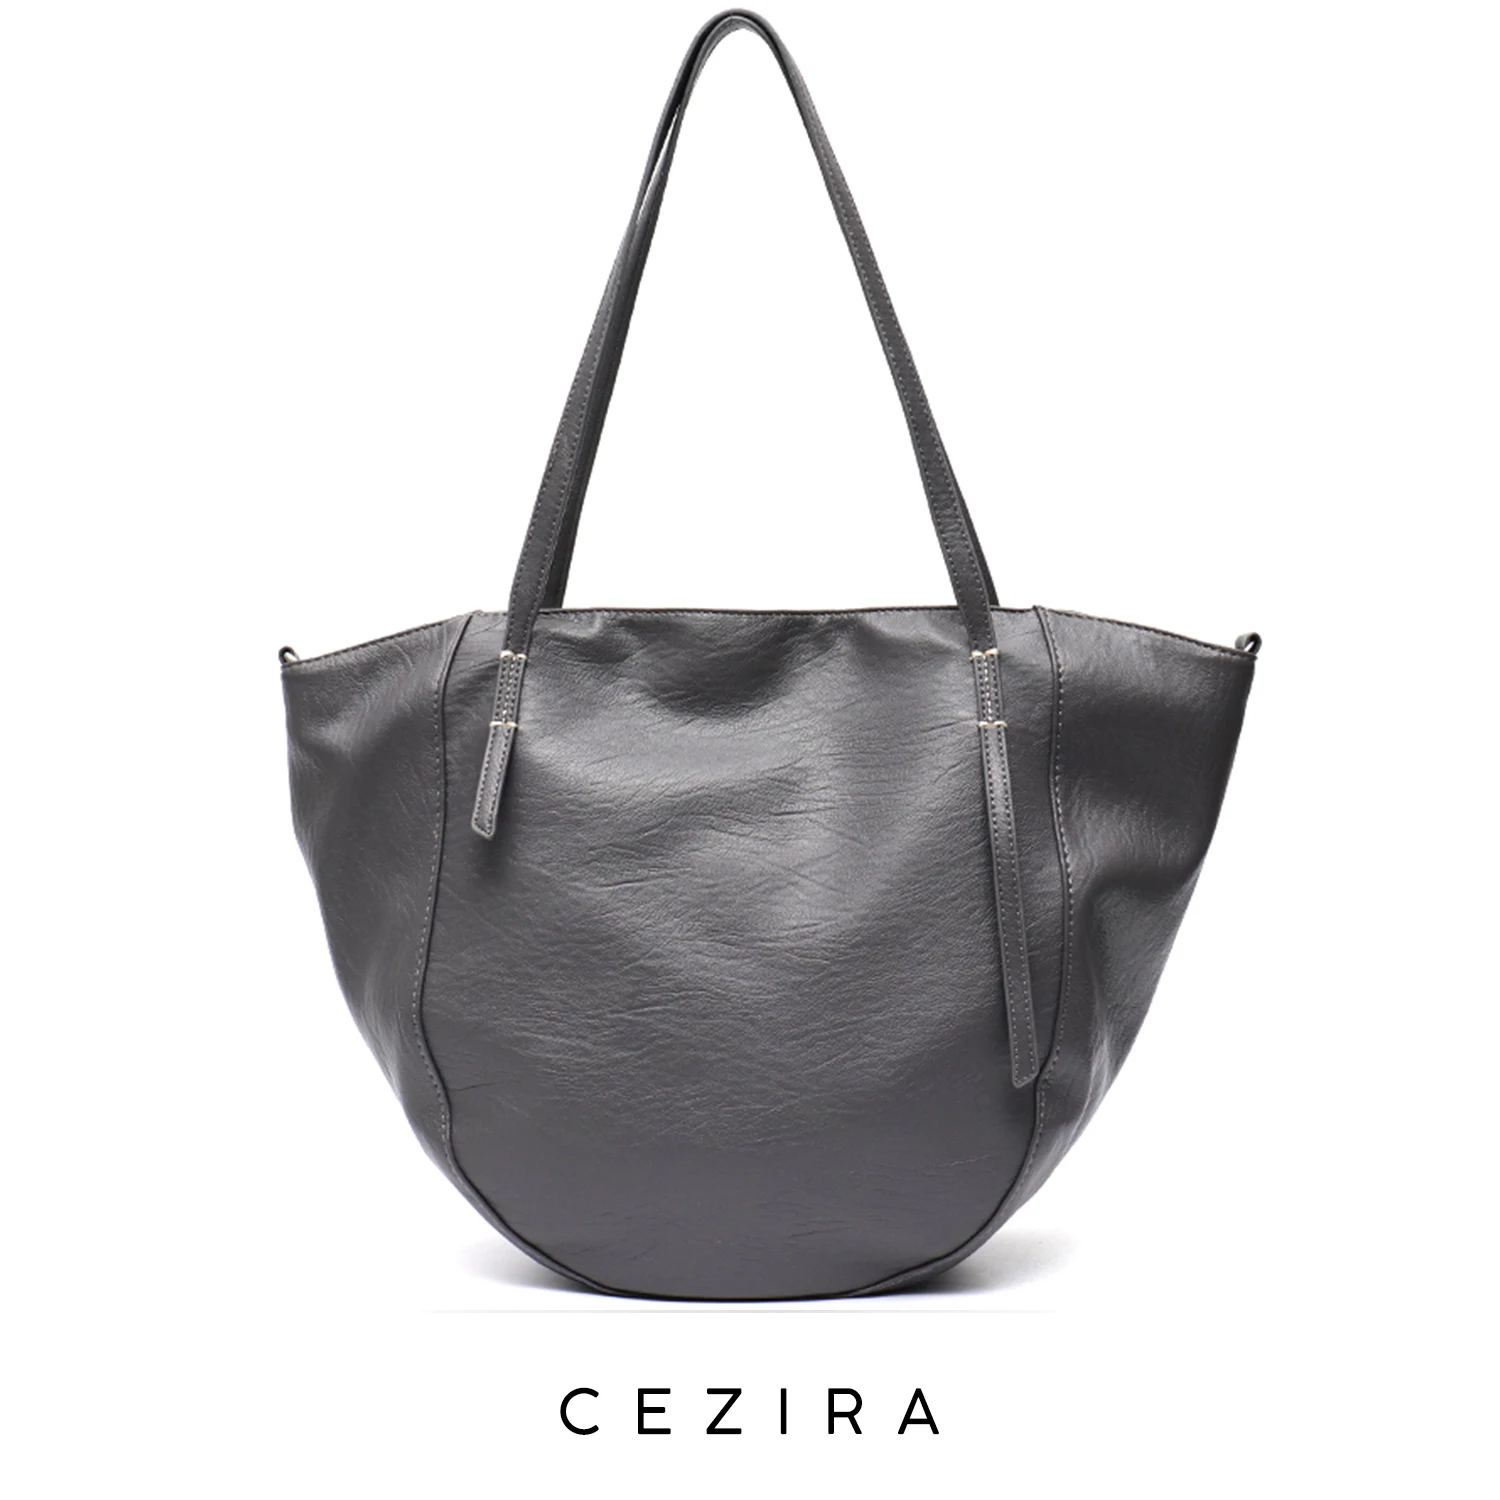 Купи CEZIRA Women Soft PU Vegan Leather Tote Casual Large Shoulder Handbags Ladies Daily Shopping Travel Hobo Bags Zipper Inner Purse за 1,614 рублей в магазине AliExpress